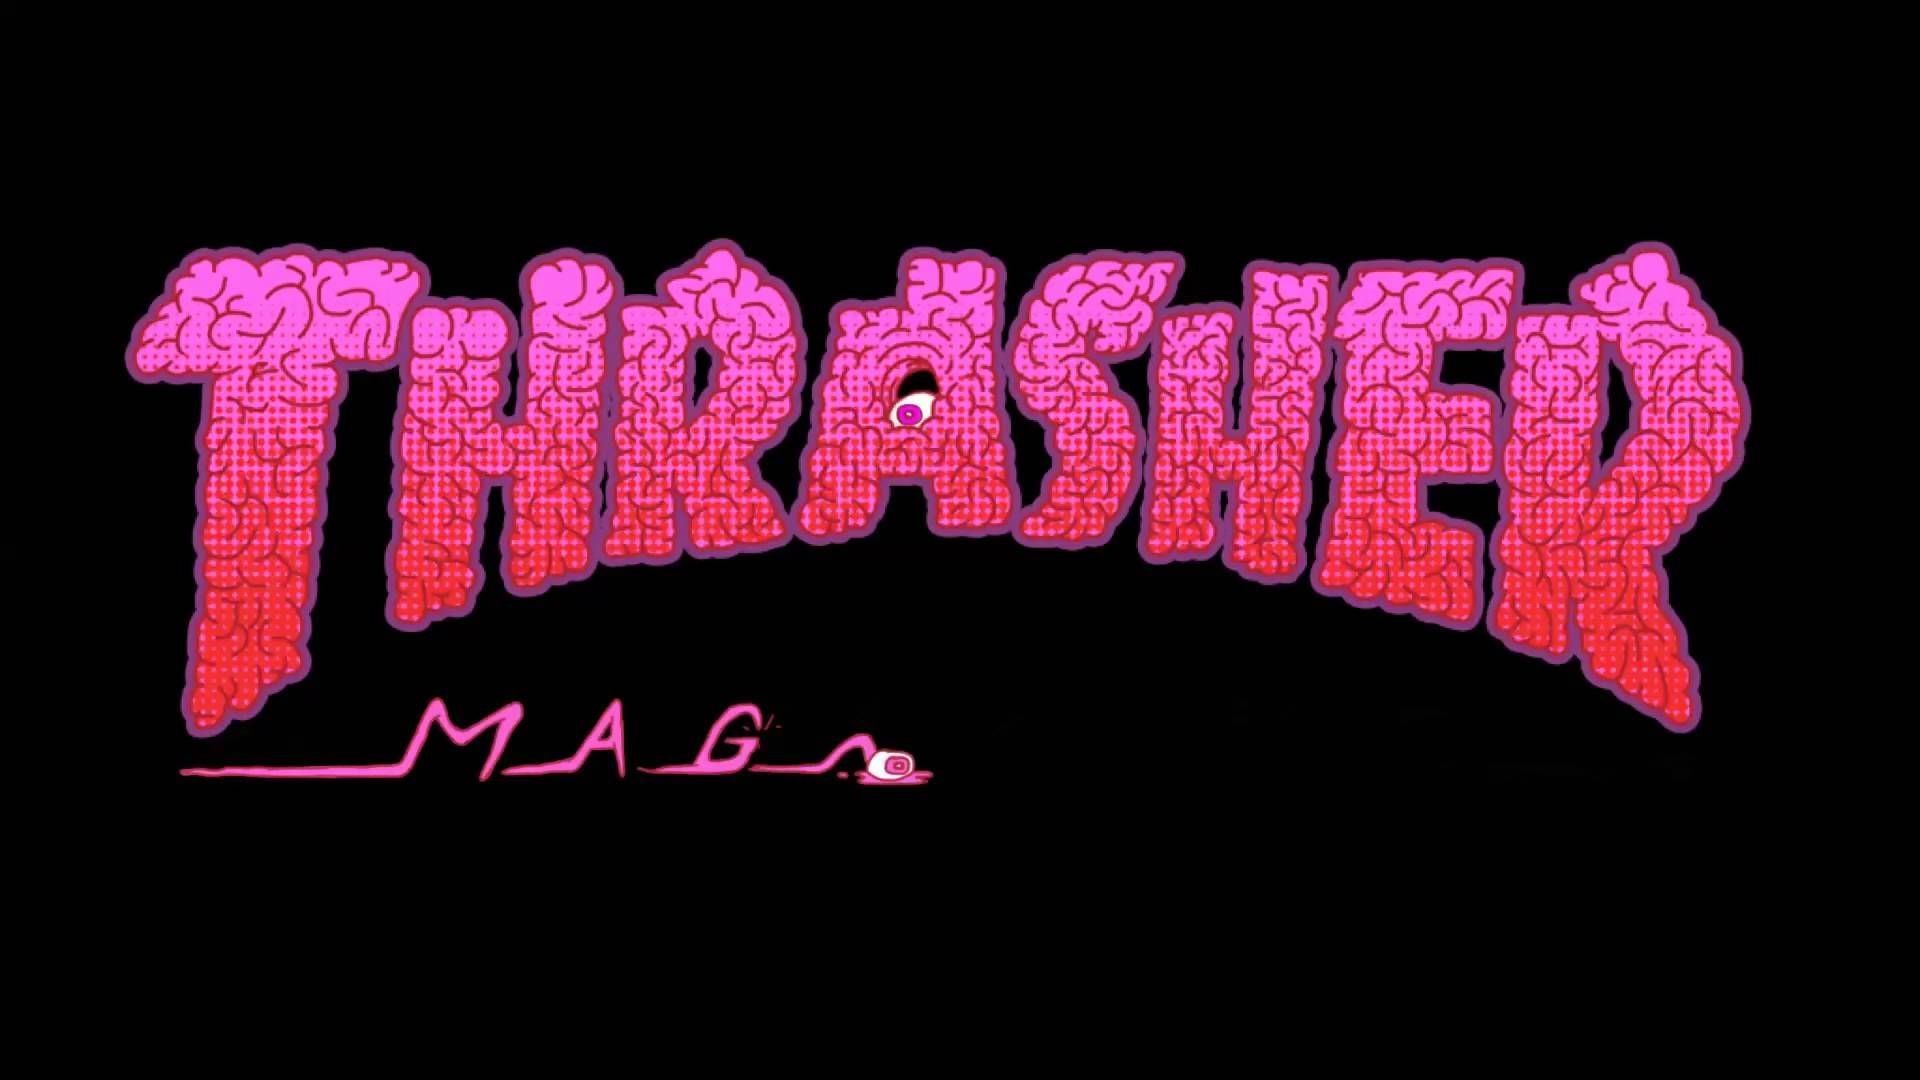 Thrasher Skateboarding Magazine's logo in pink on a black background - Baddie